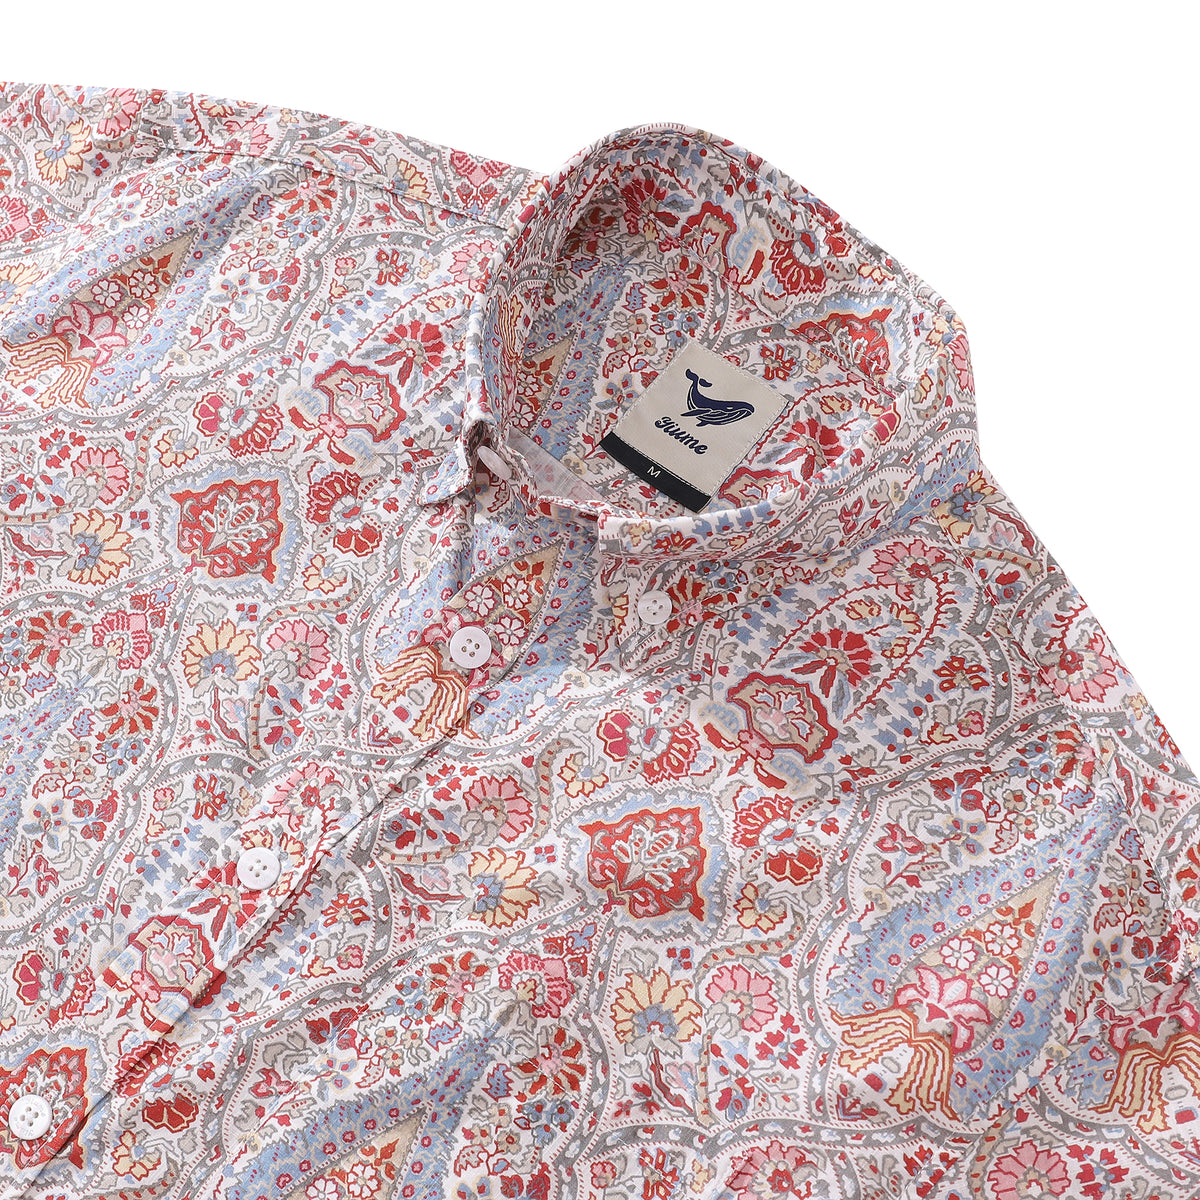 Men's Hawaiian Shirt Flower Pattern Print Cotton Button-down Short Sle ...